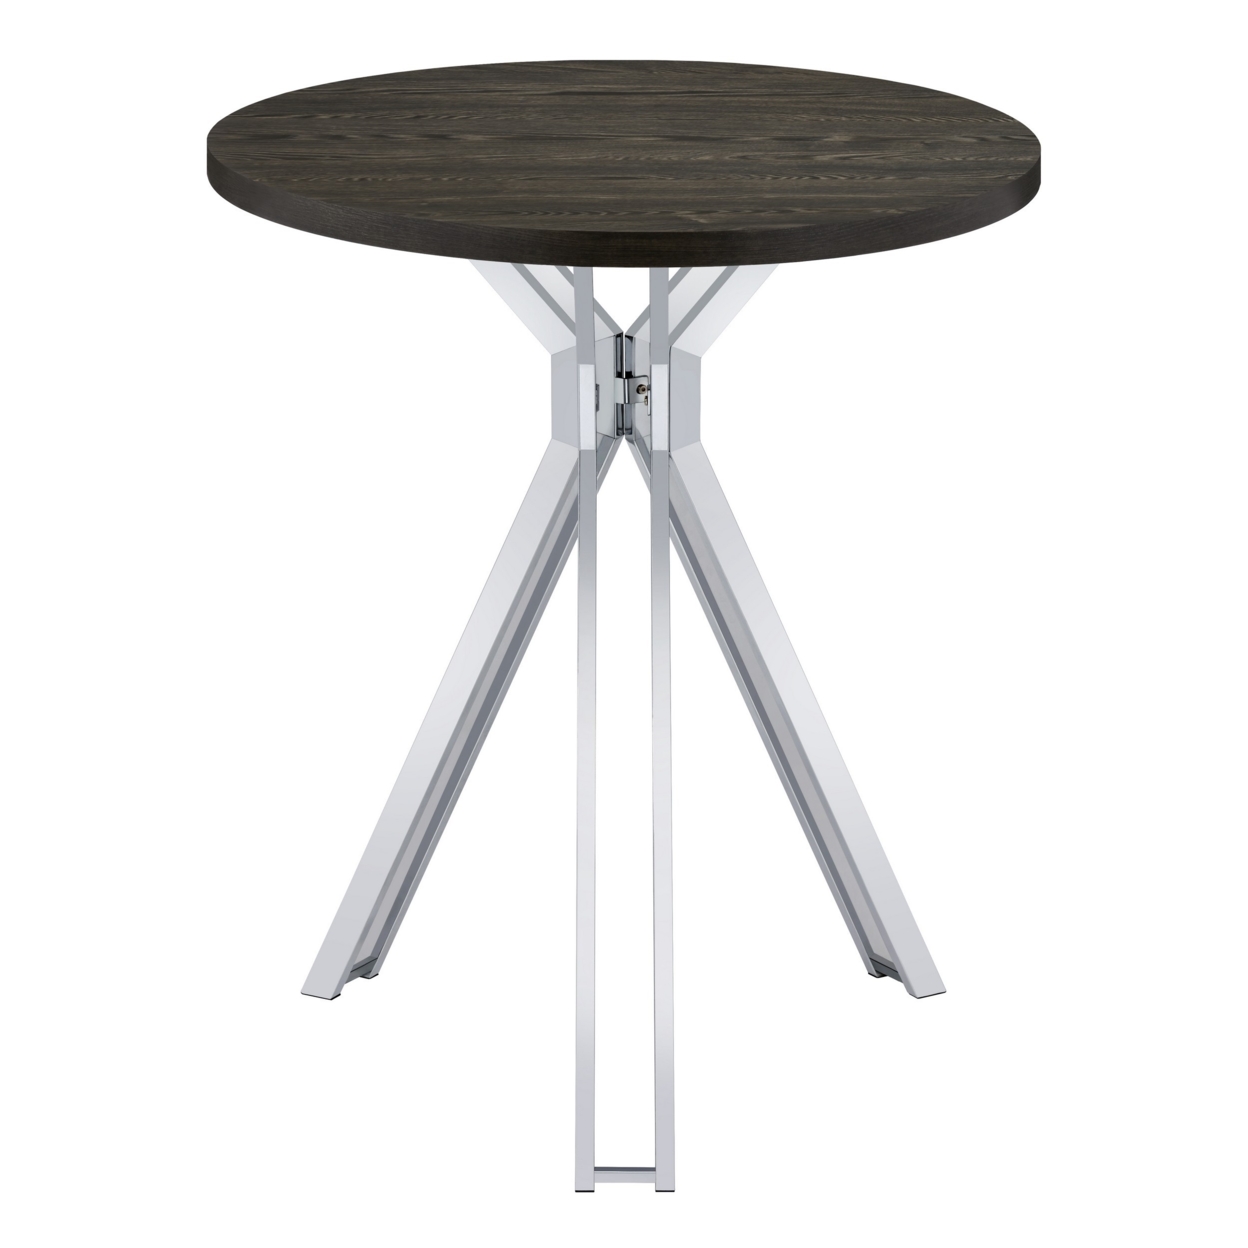 43 Inch Modern Bar Table, Gray Round Top, Polished Chrome Angled Legs - Saltoro Sherpi